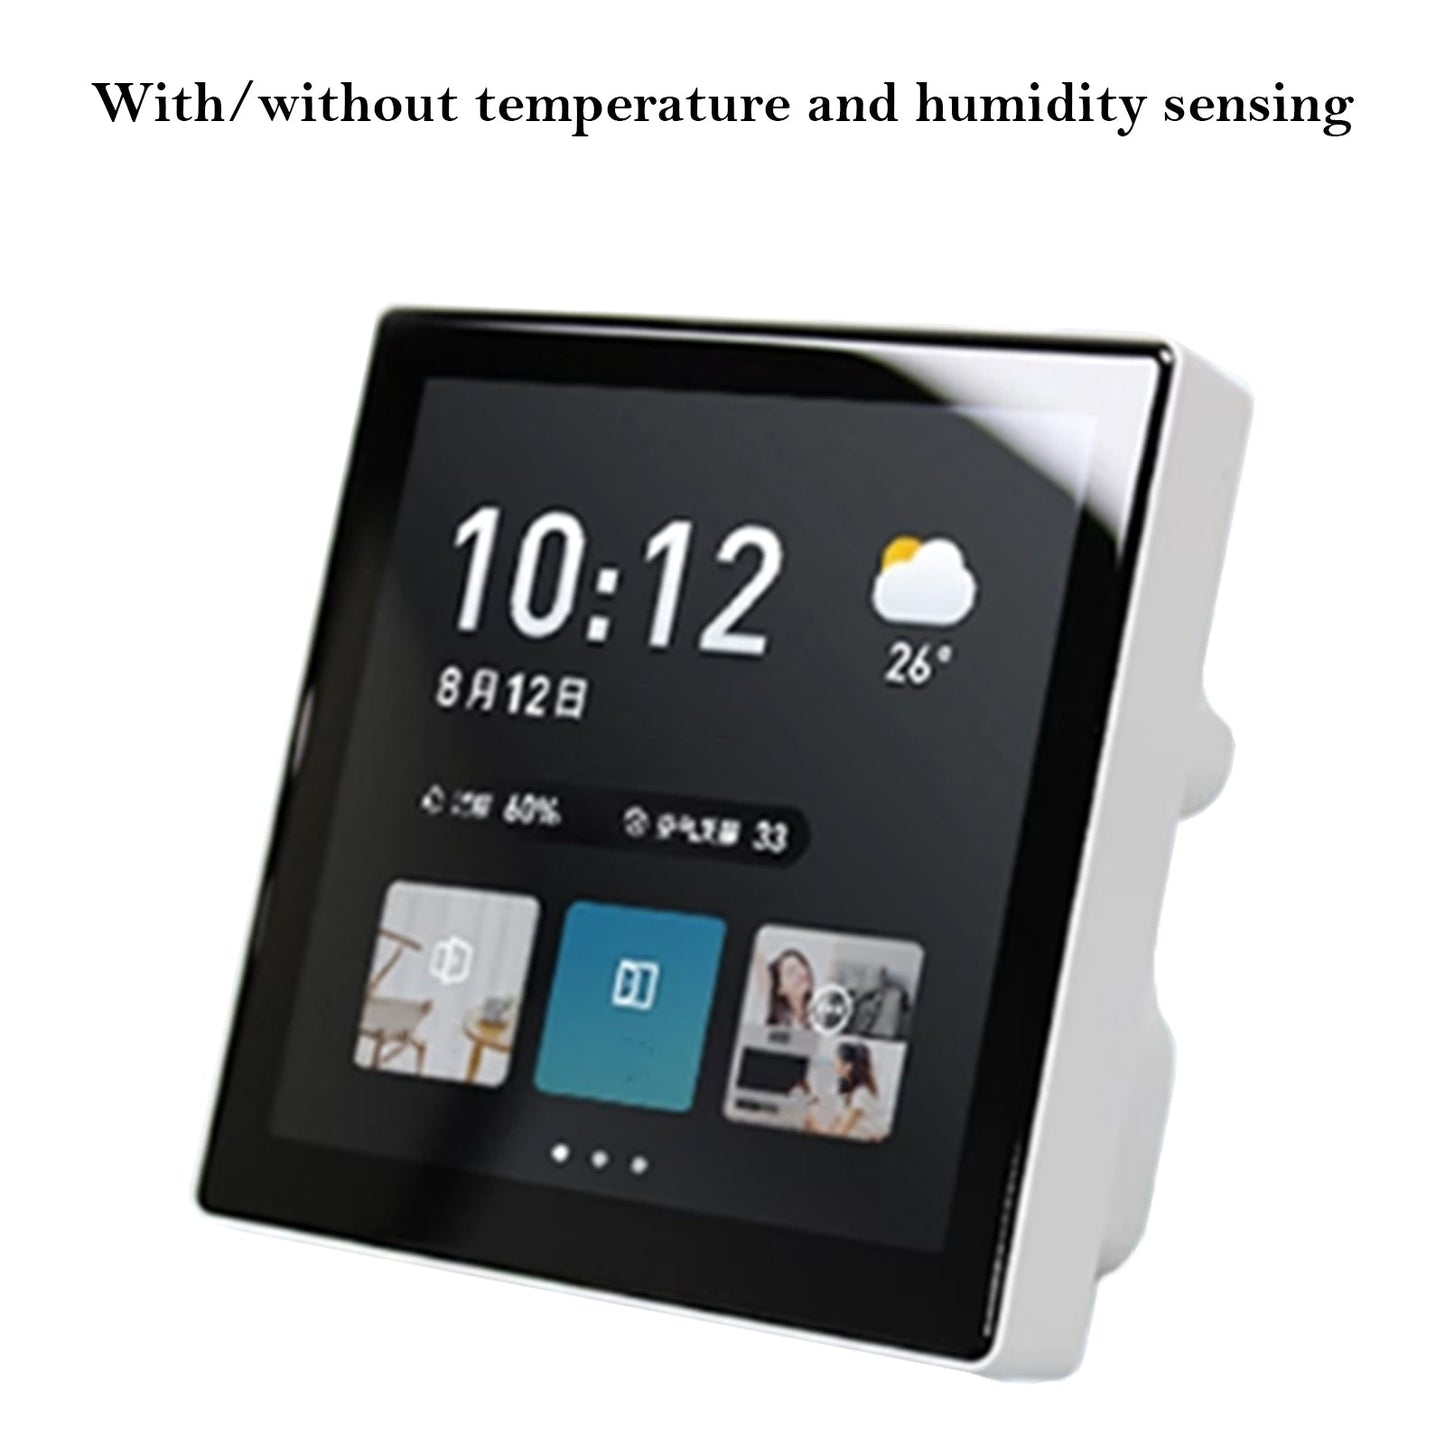 4 Inch Intelligent Control Panel with Temperature Humidity Sensors ESP32-S3 86